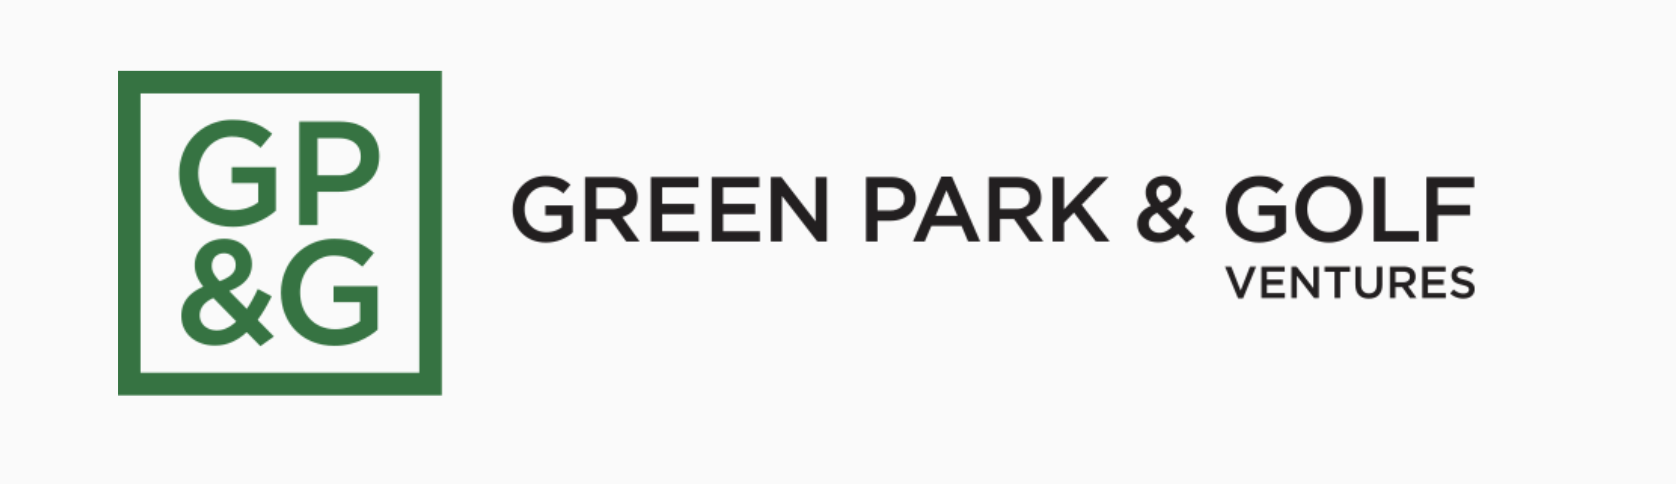 Green Park & Golf Ventures